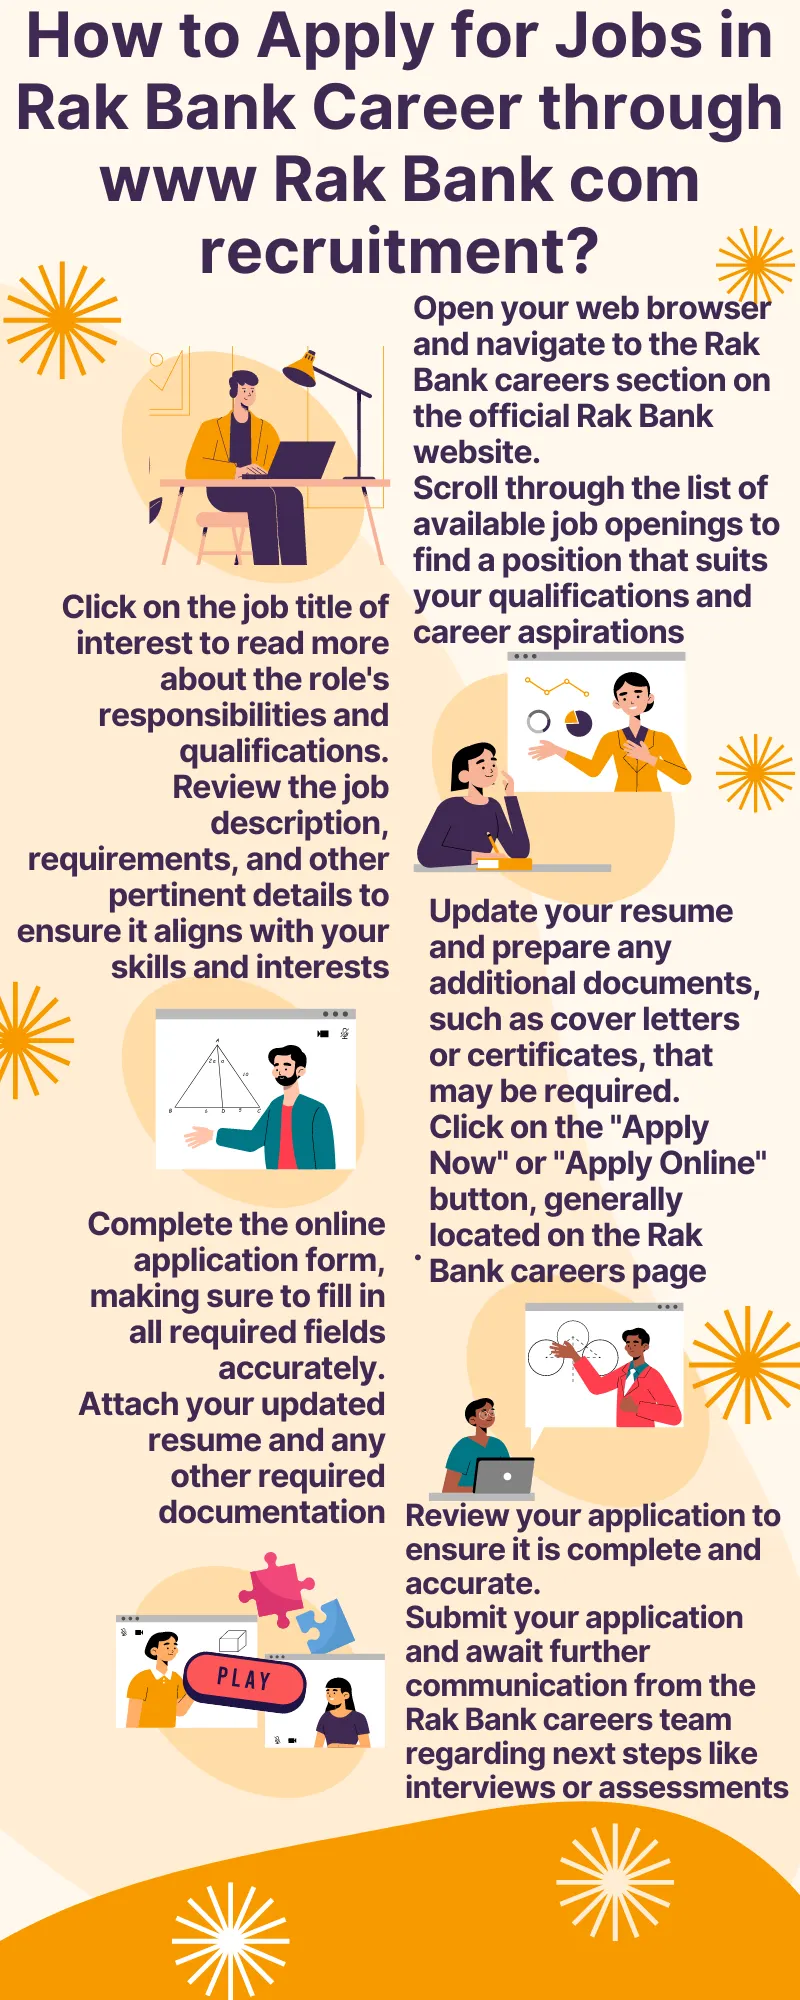 How to Apply for Jobs in Rak Bank Career through www Rak Bank com recruitment?